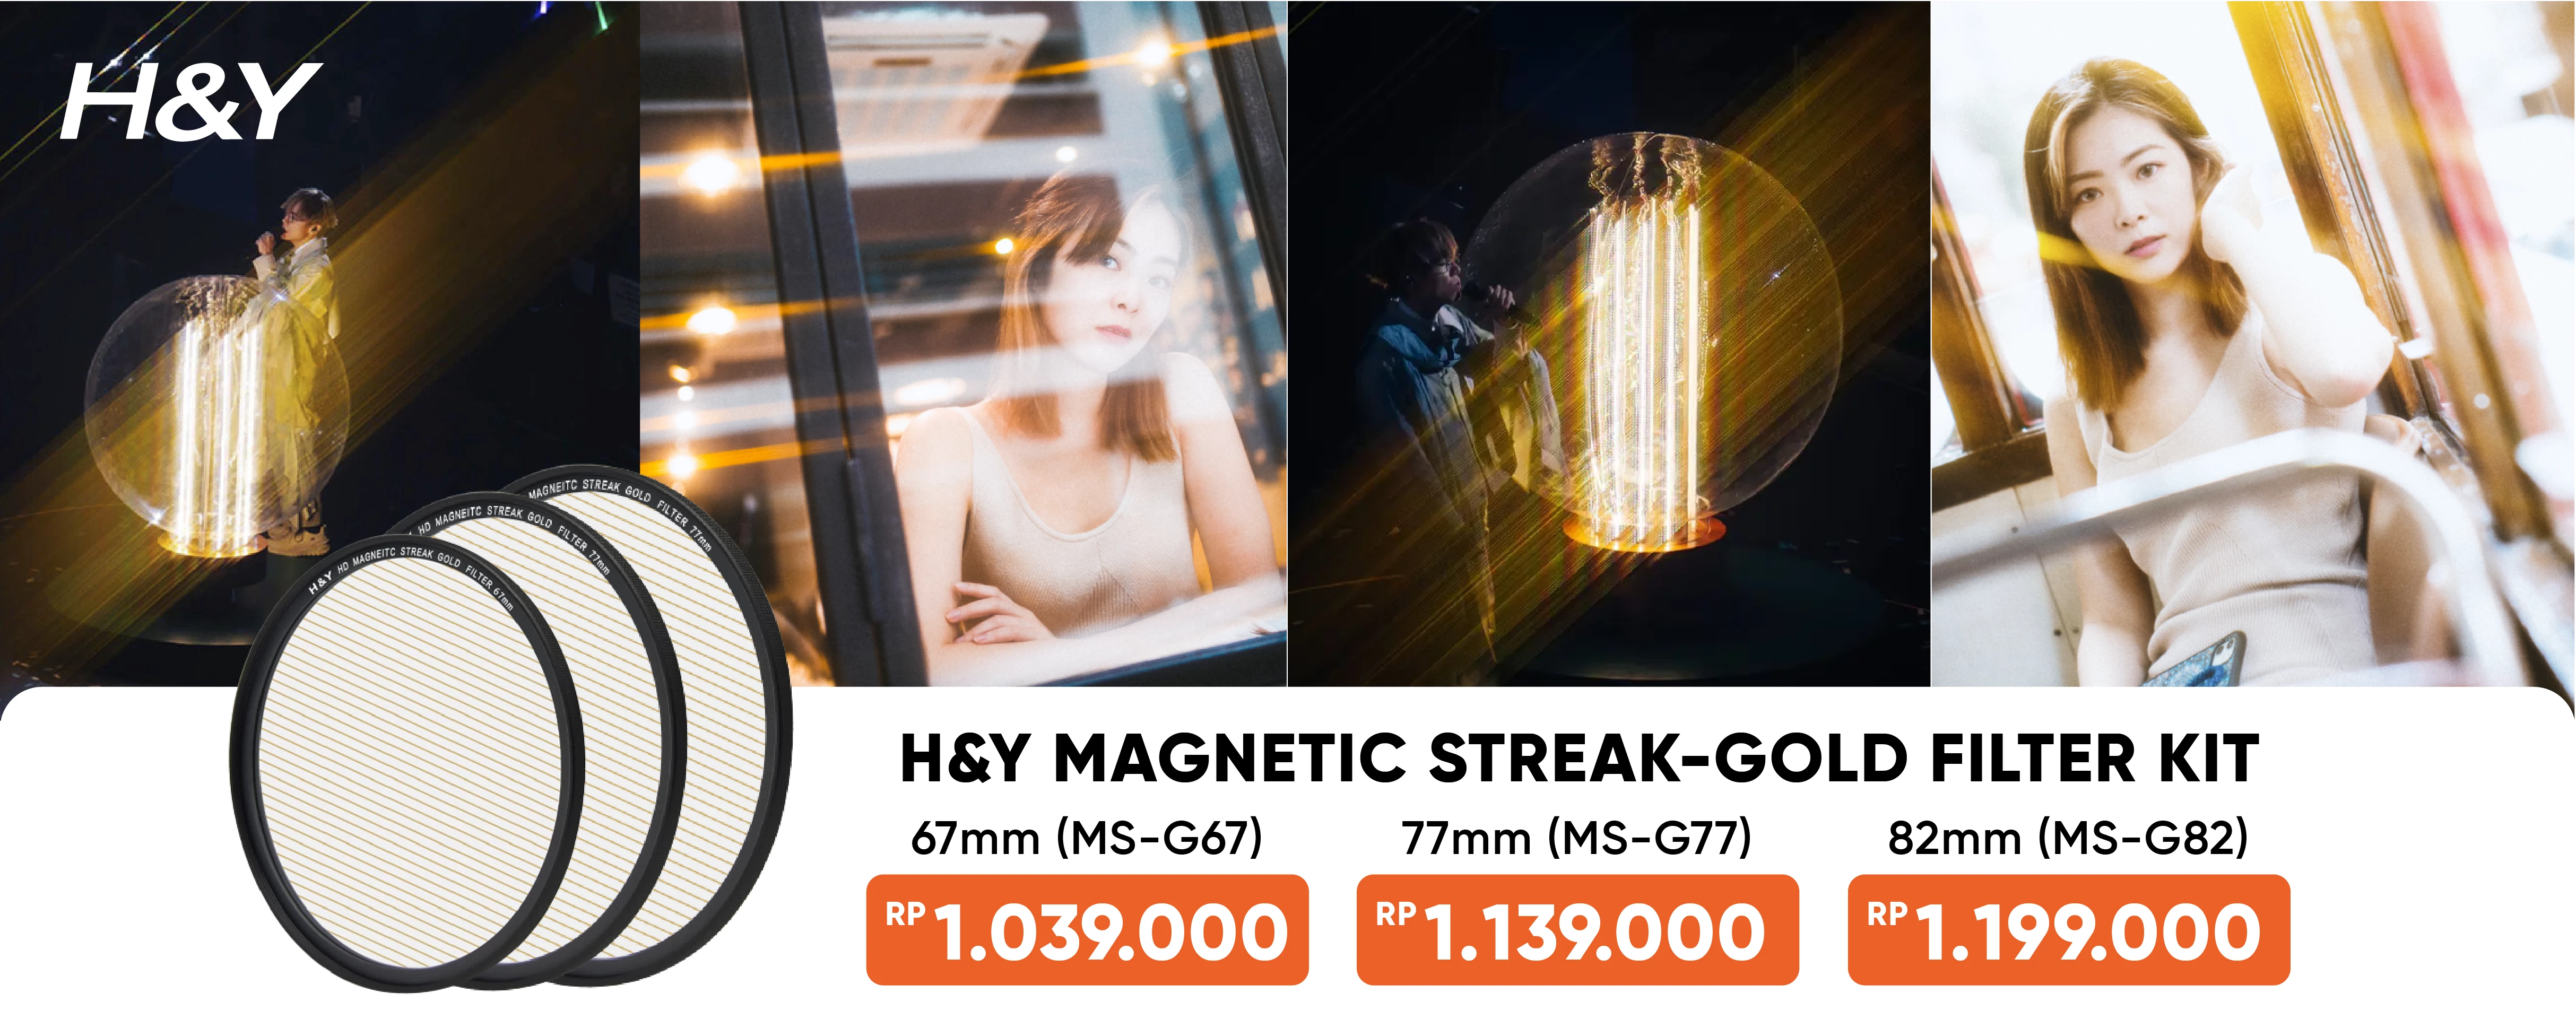 H&Y Magnetic Streak-Gold Filter Kit 67mm (MS-G67)